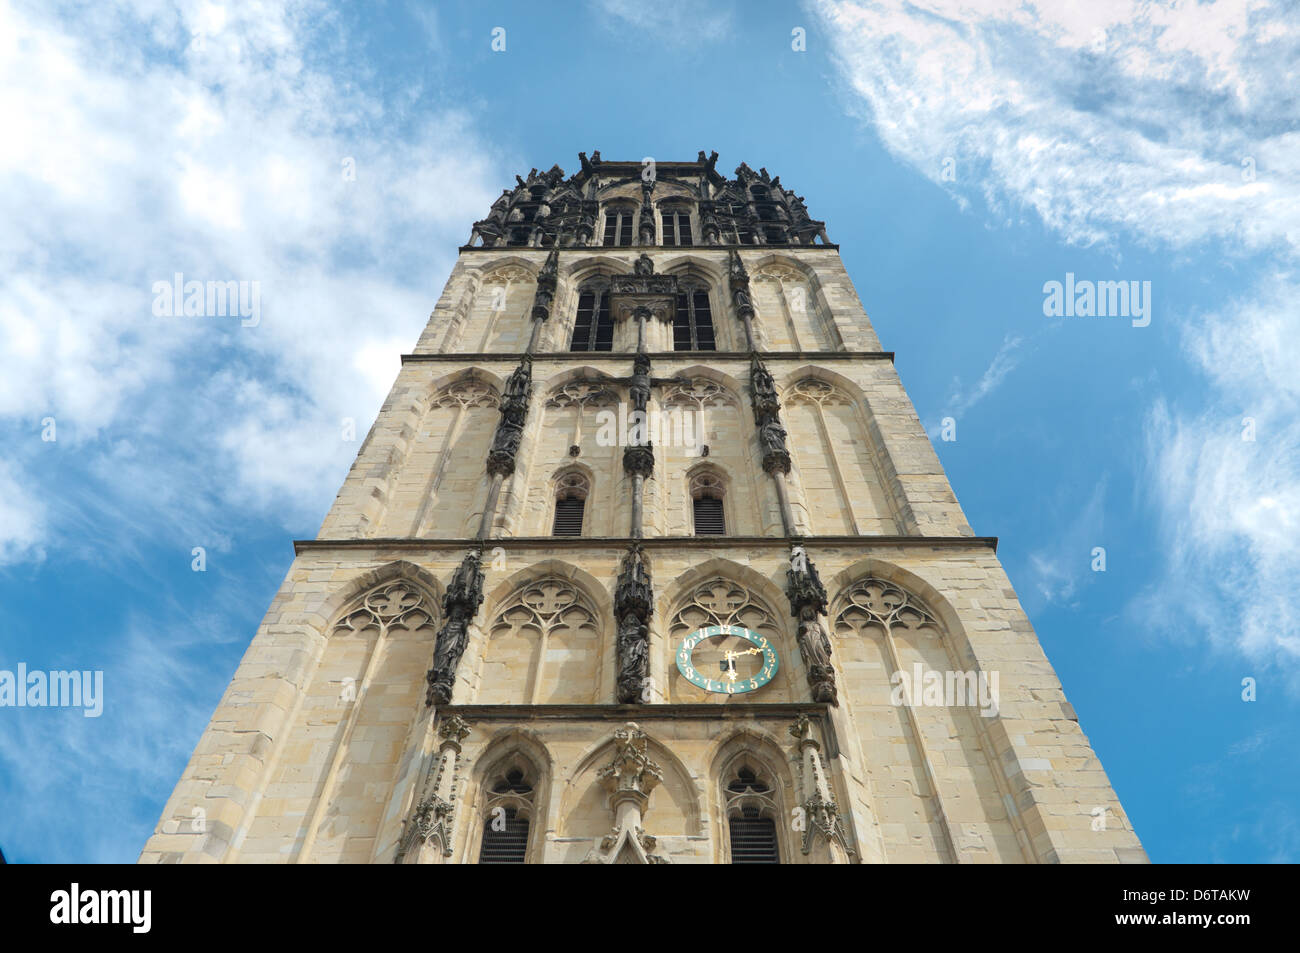 Tower from the Uberwasserkirche in Munster, Germany Stock Photo